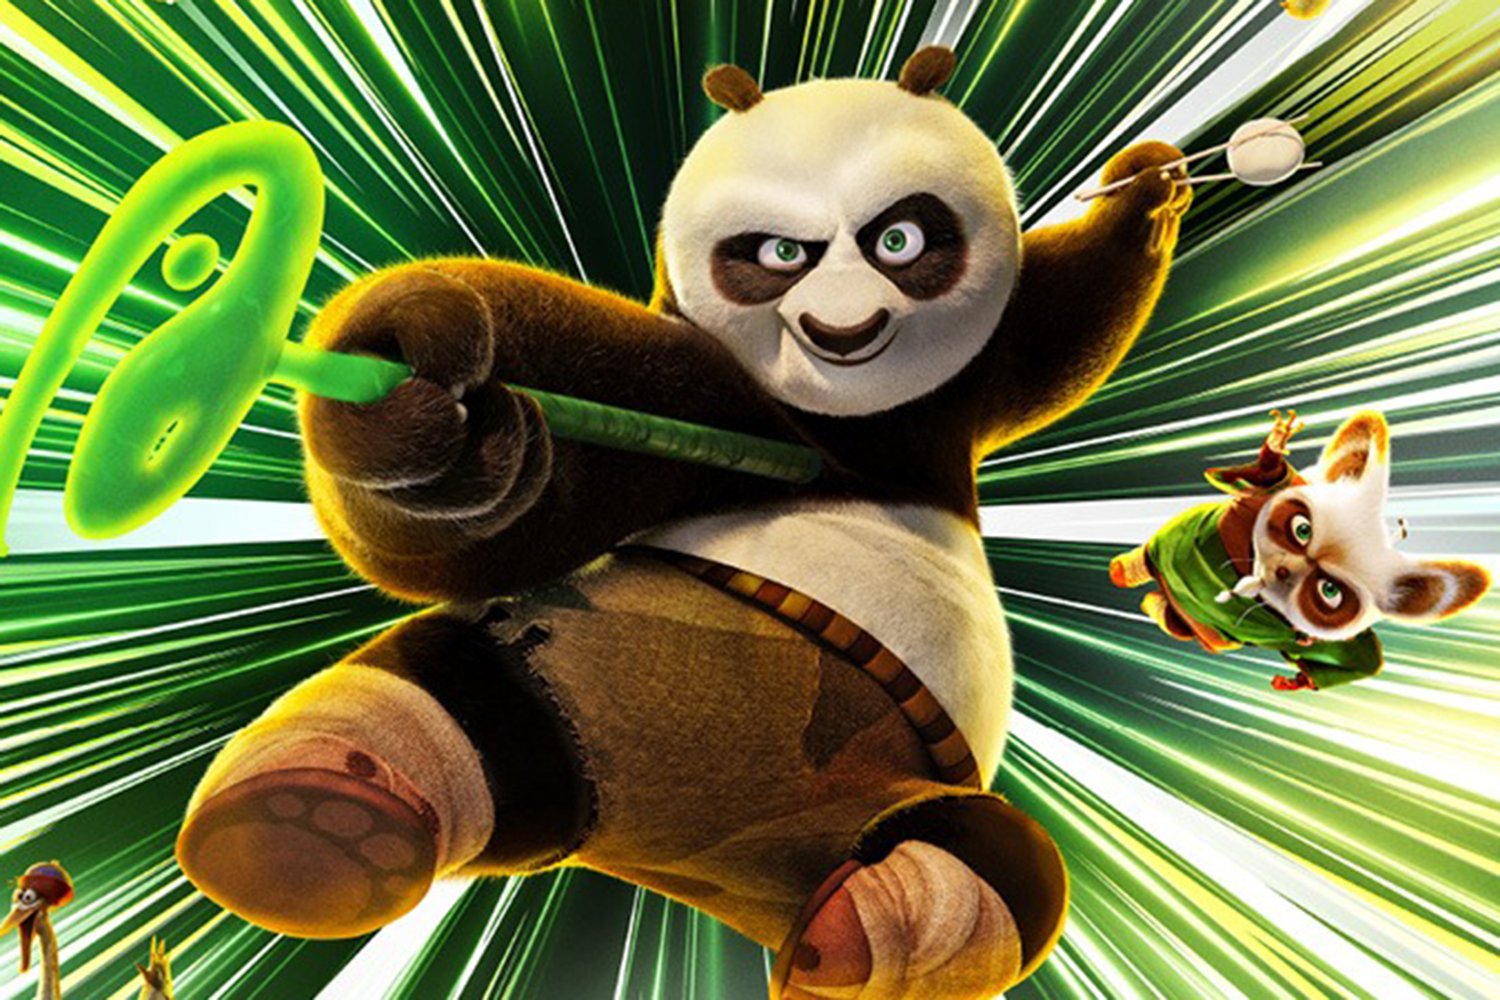 Kungfu Panda 4 Full Movie Free Online Streaming Full HD